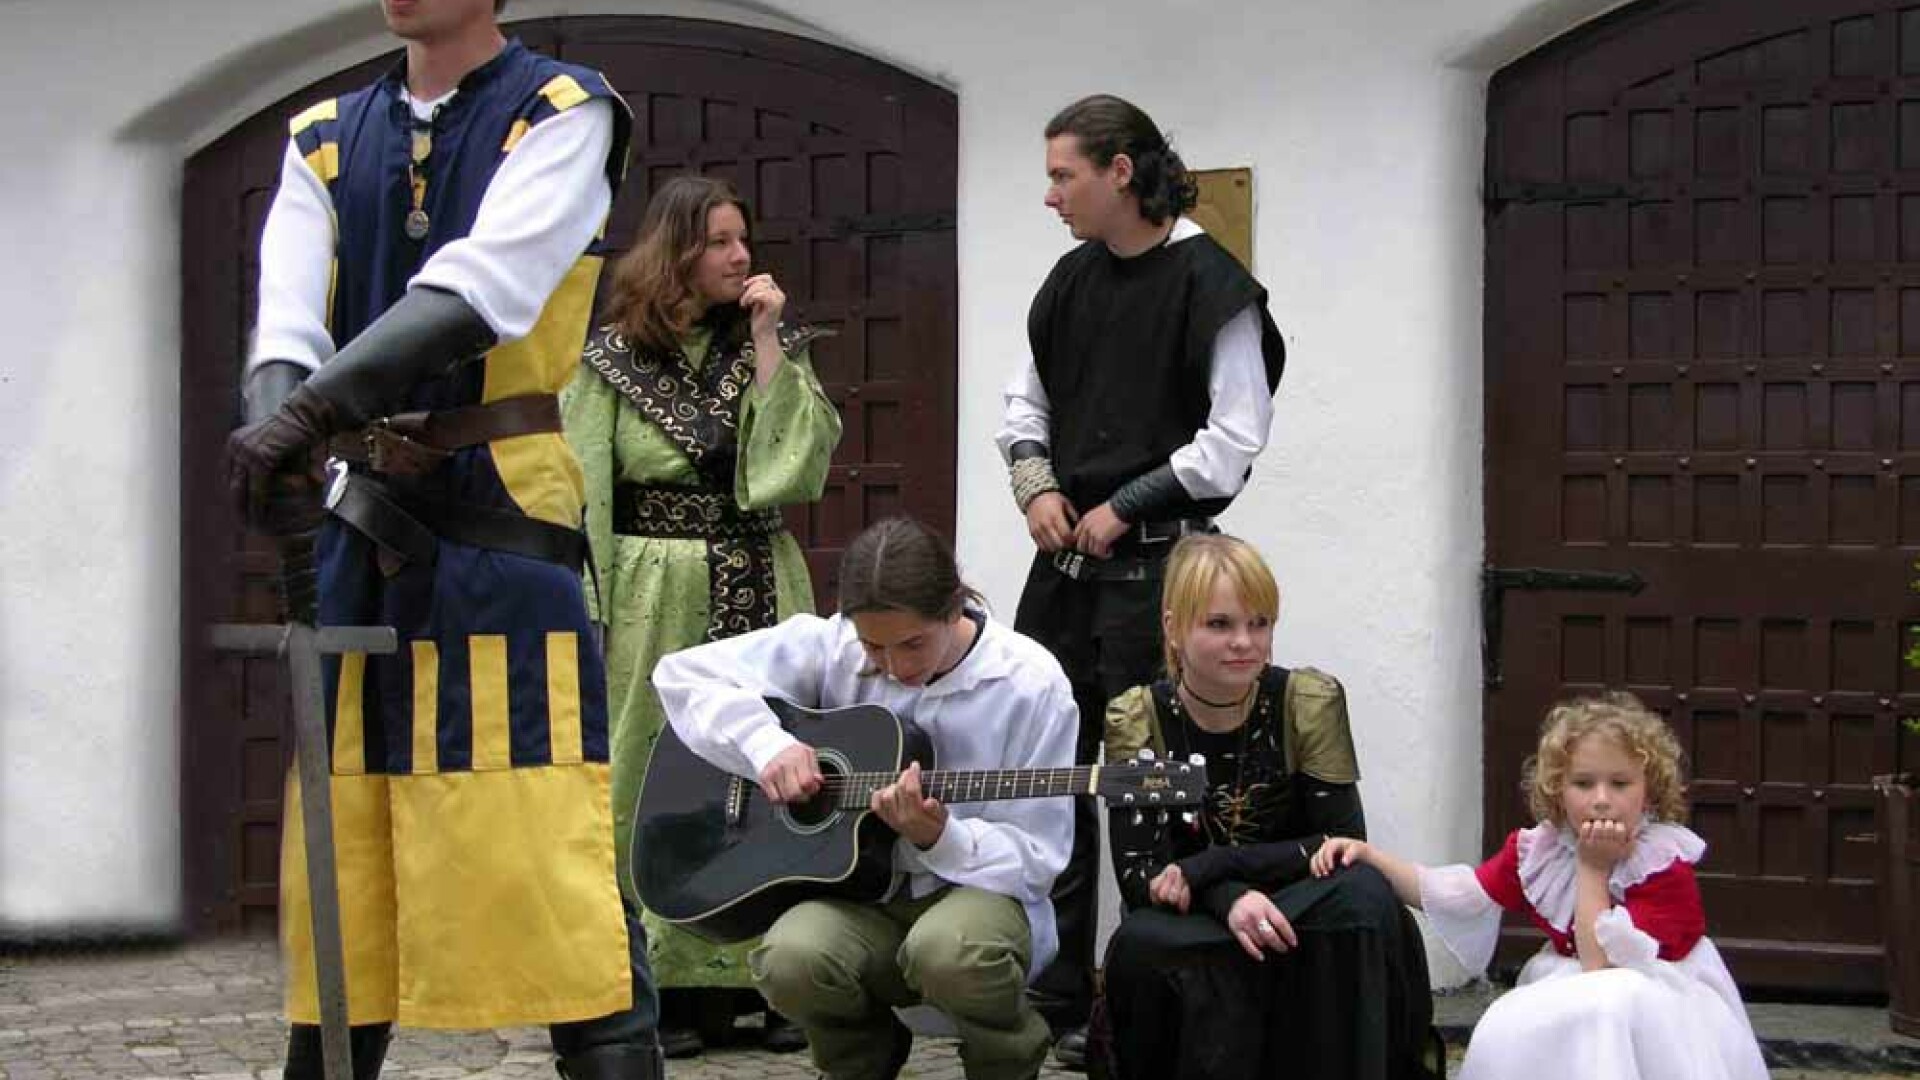 Festival Medieval la Suceava